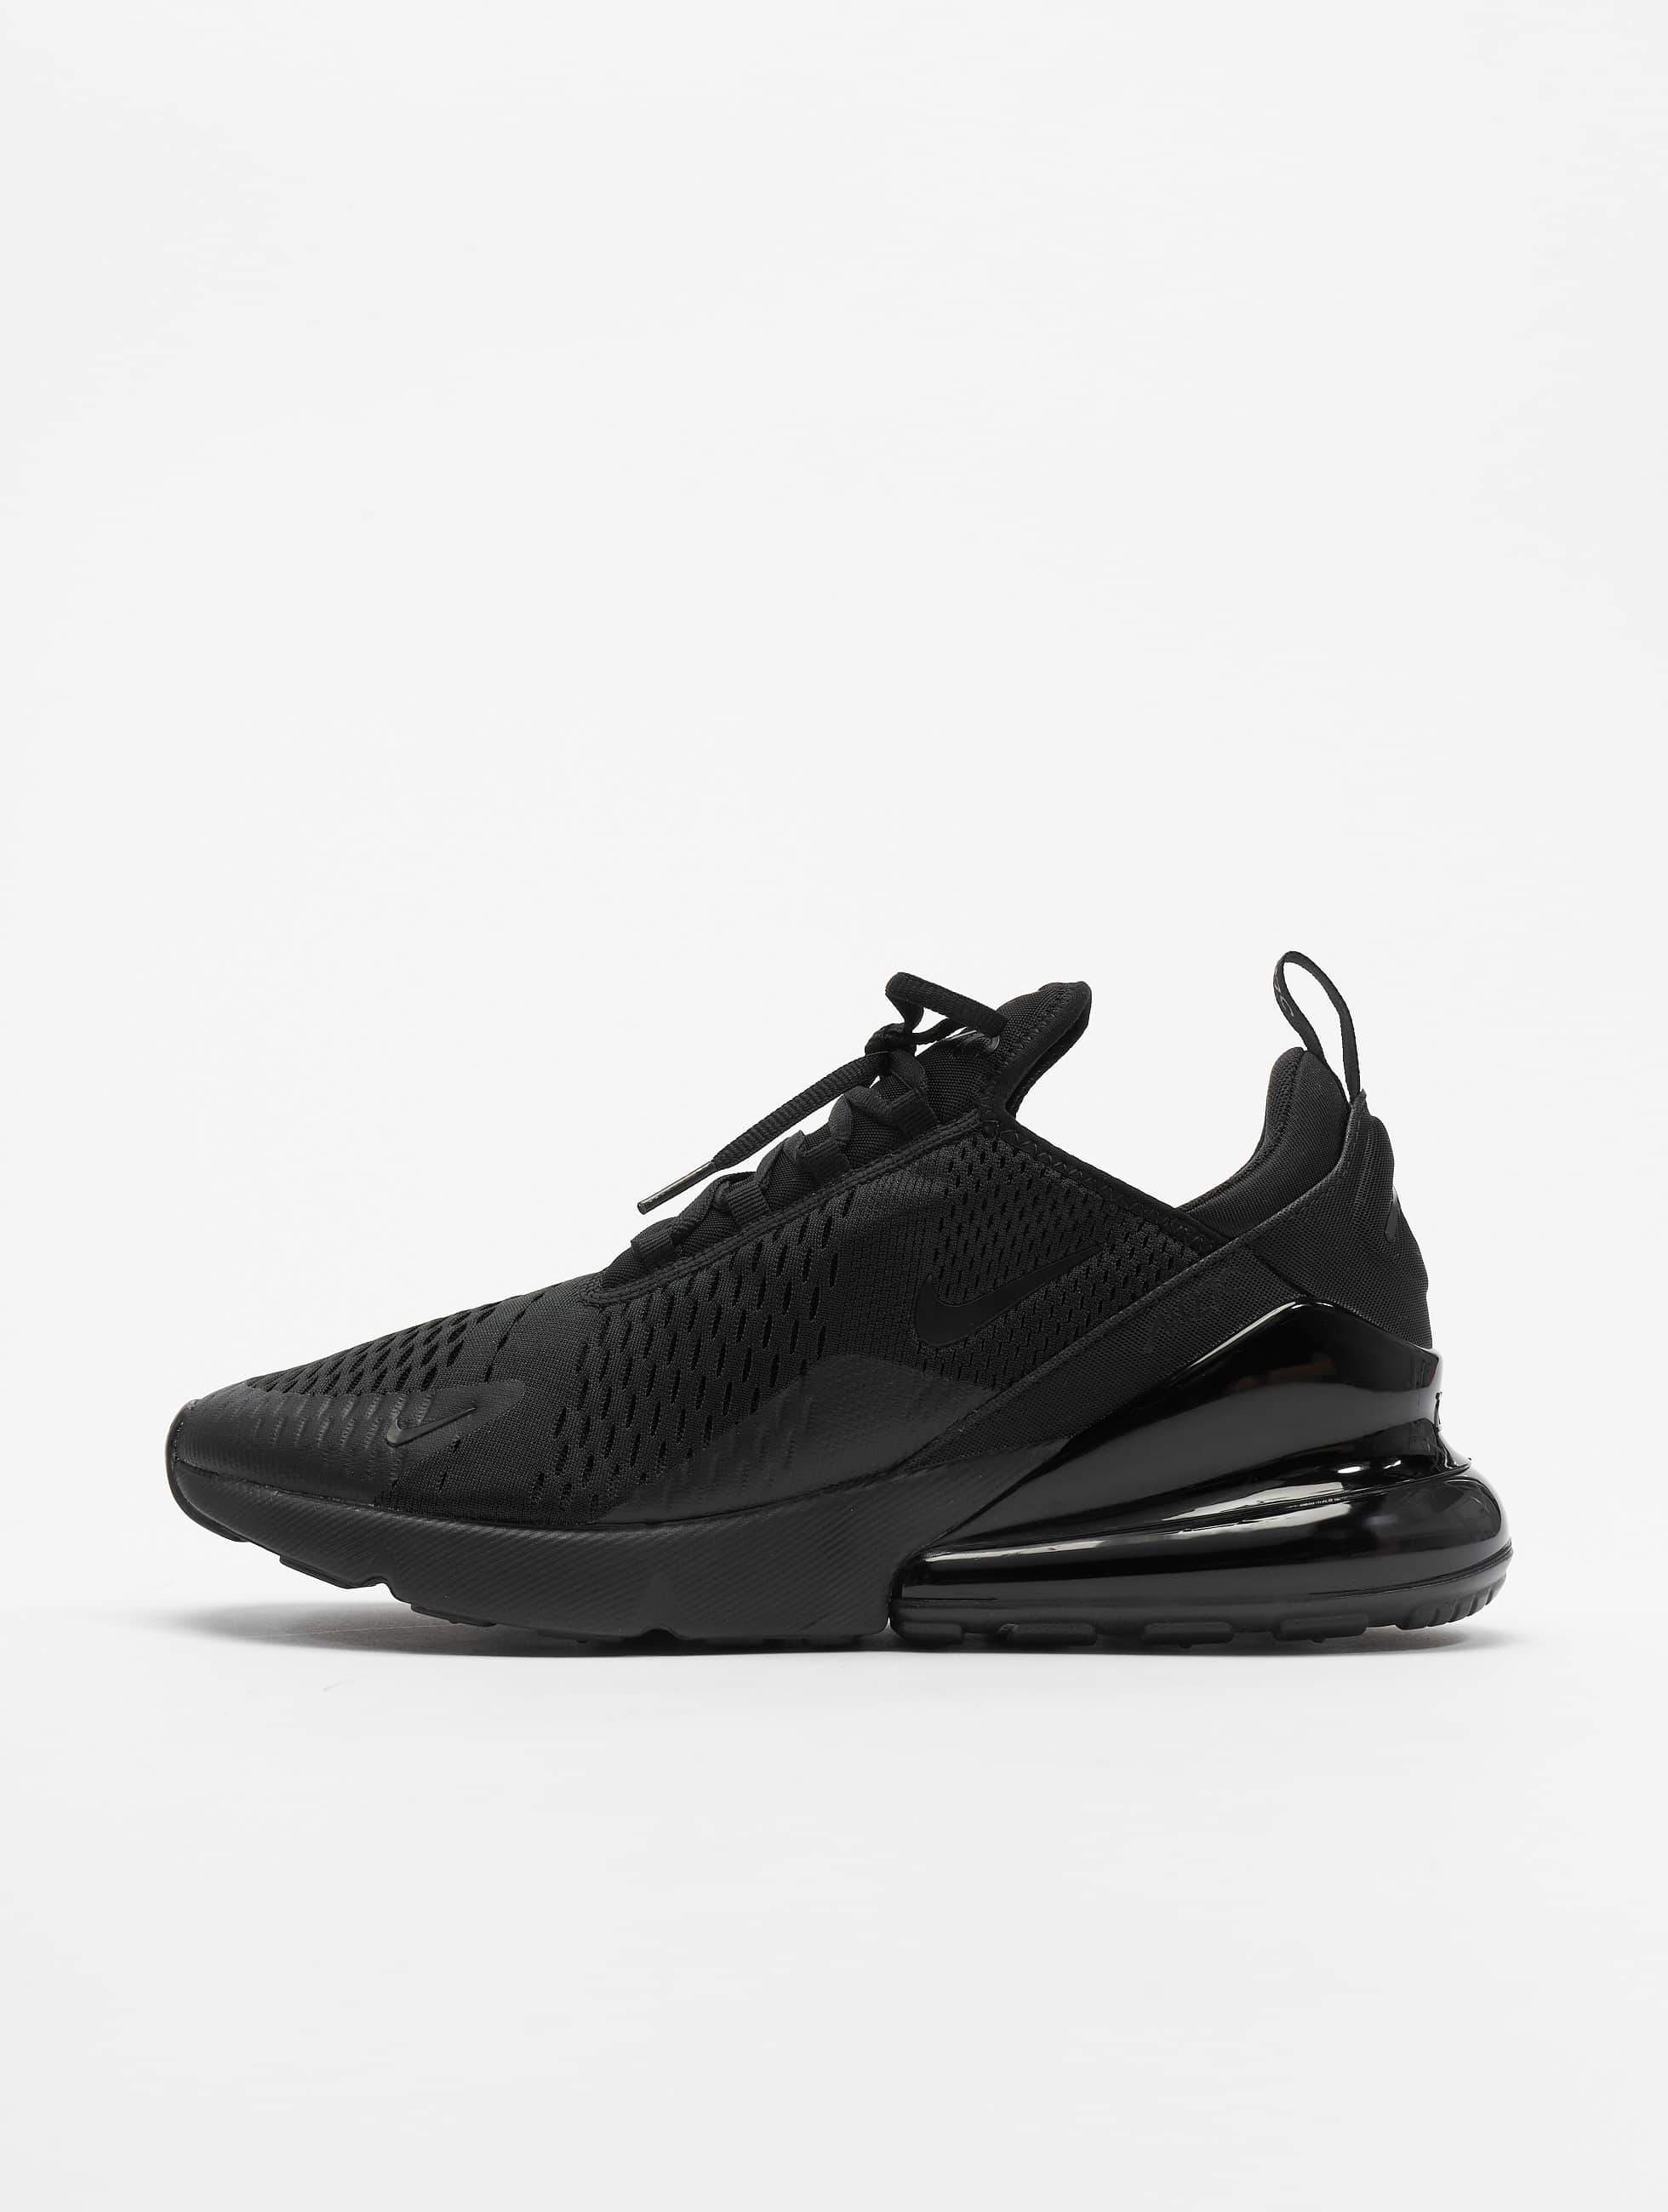 optocht Onbemand Grand Nike schoen / sneaker Air Max 270 in zwart 537024